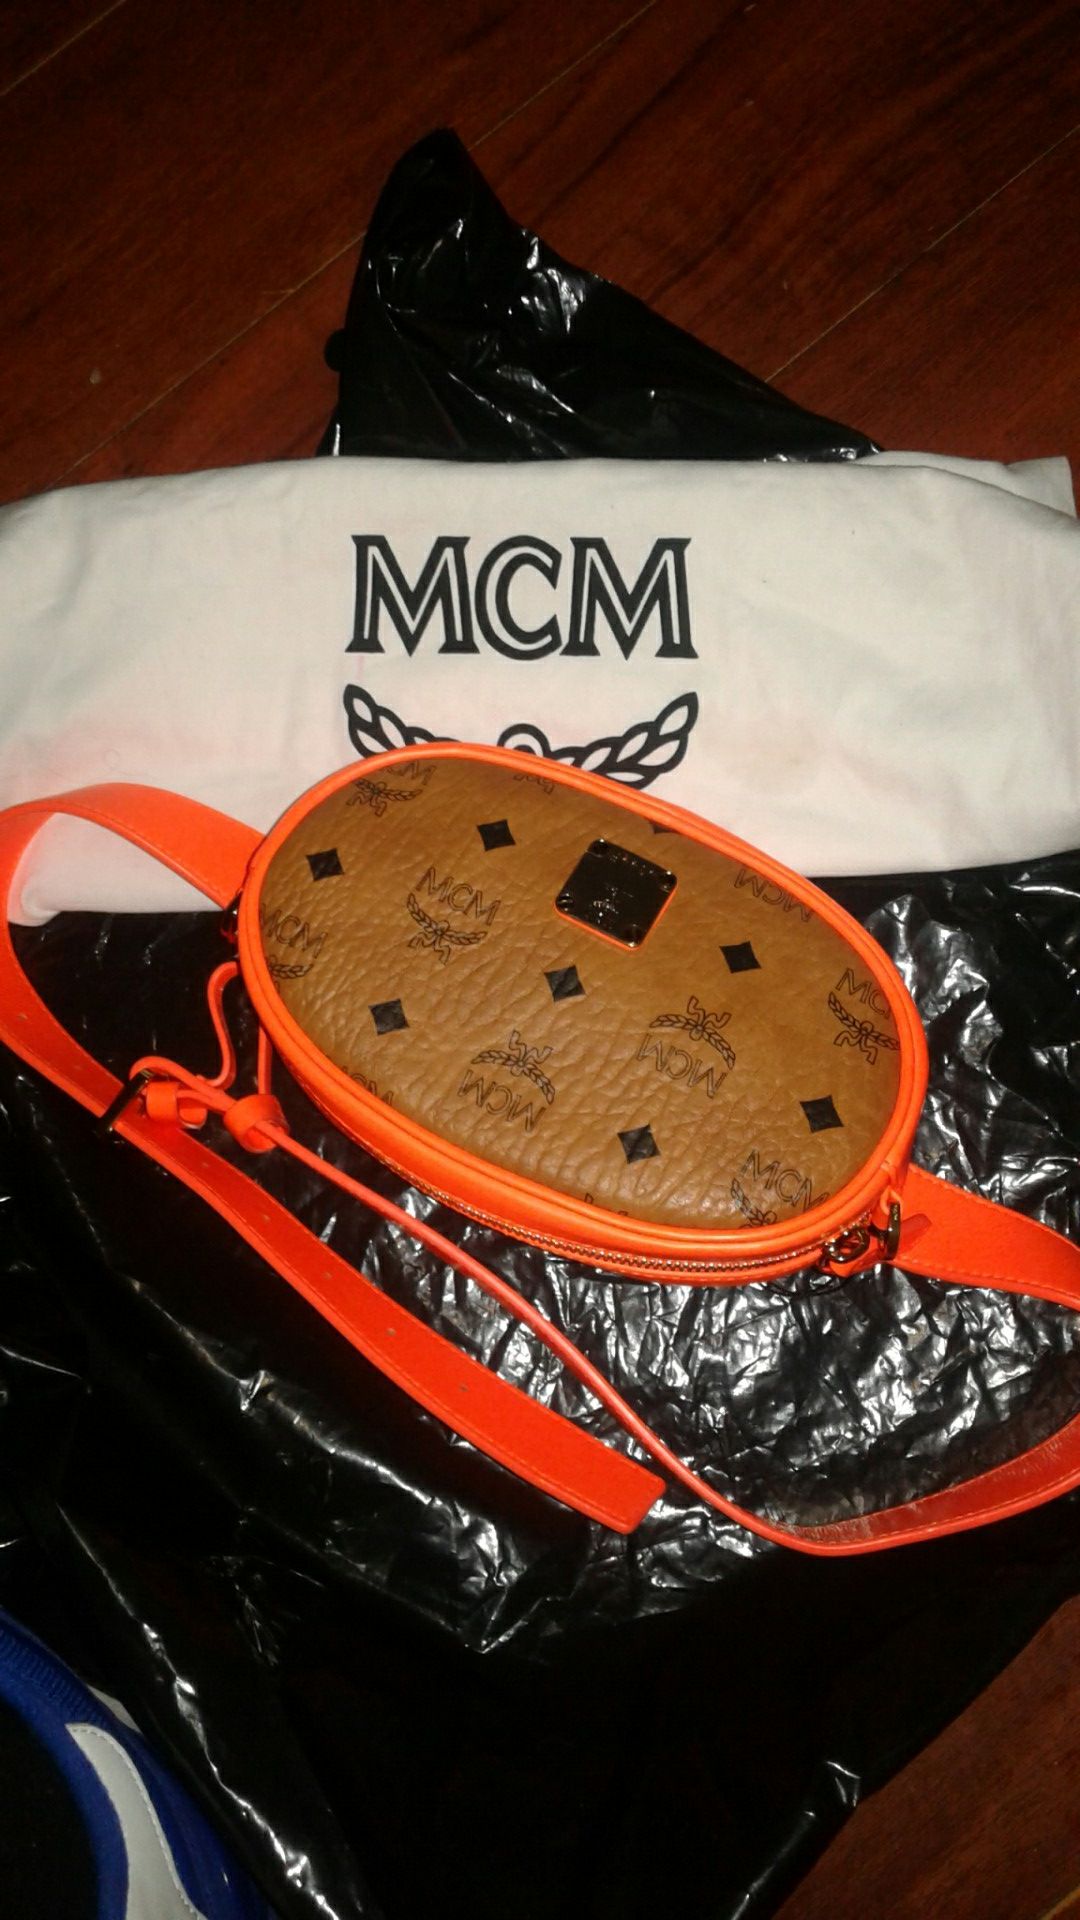 Mcm bag / belt bag